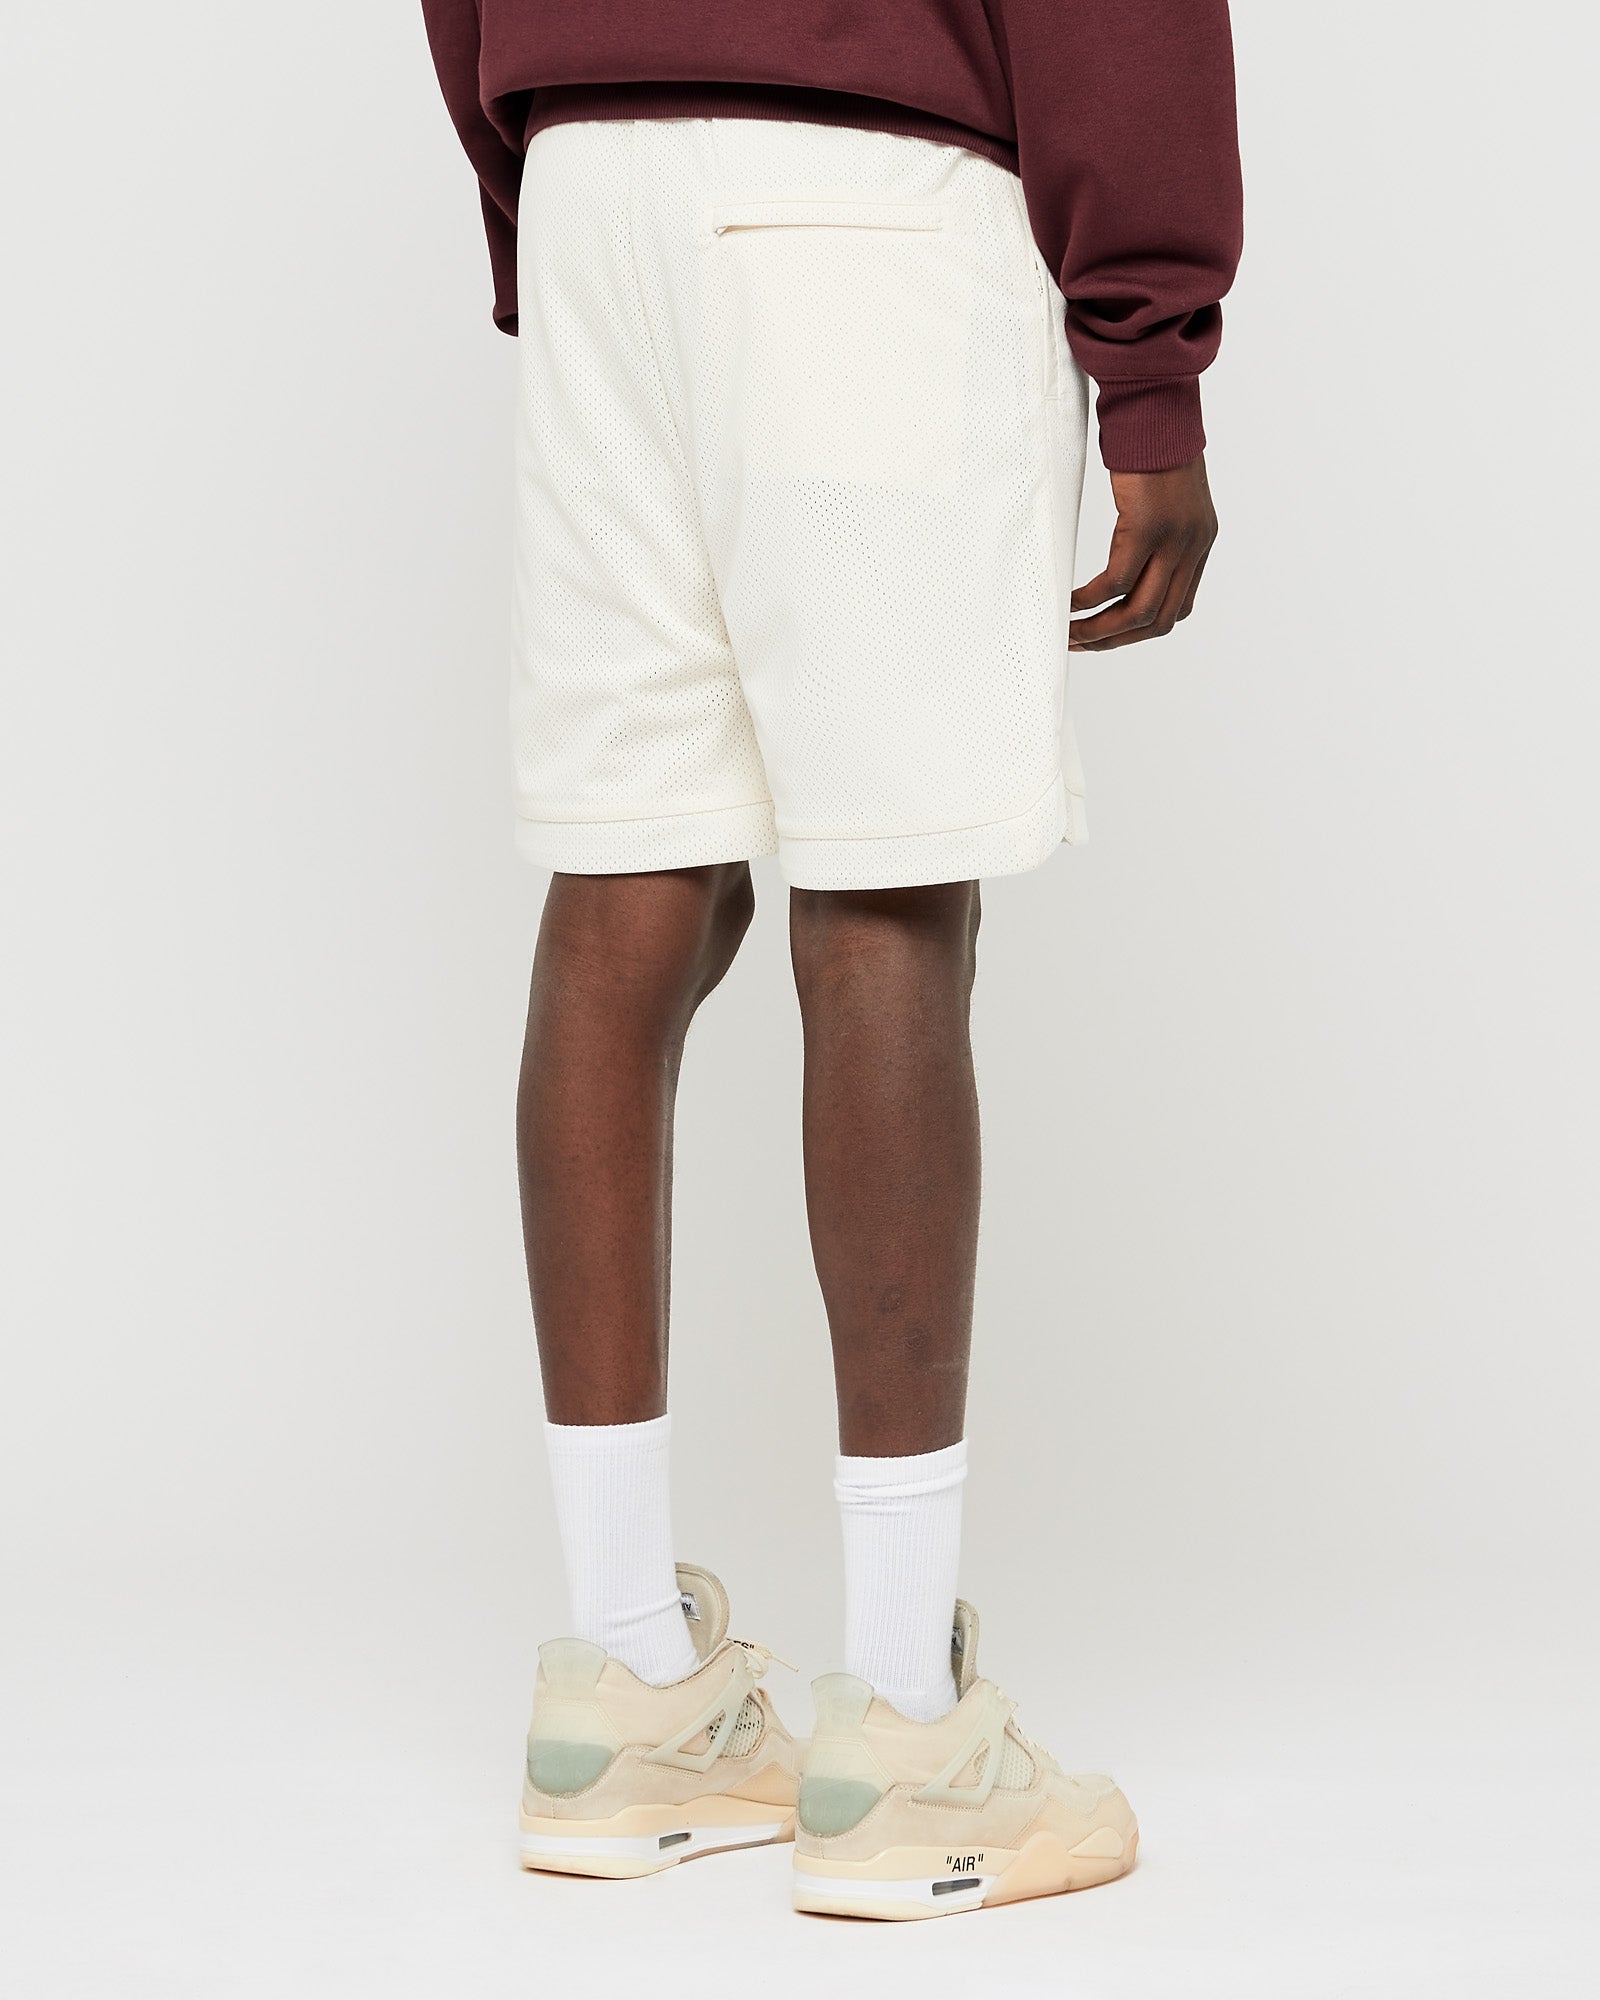 Too Fresh White- Double layer Mesh Shorts